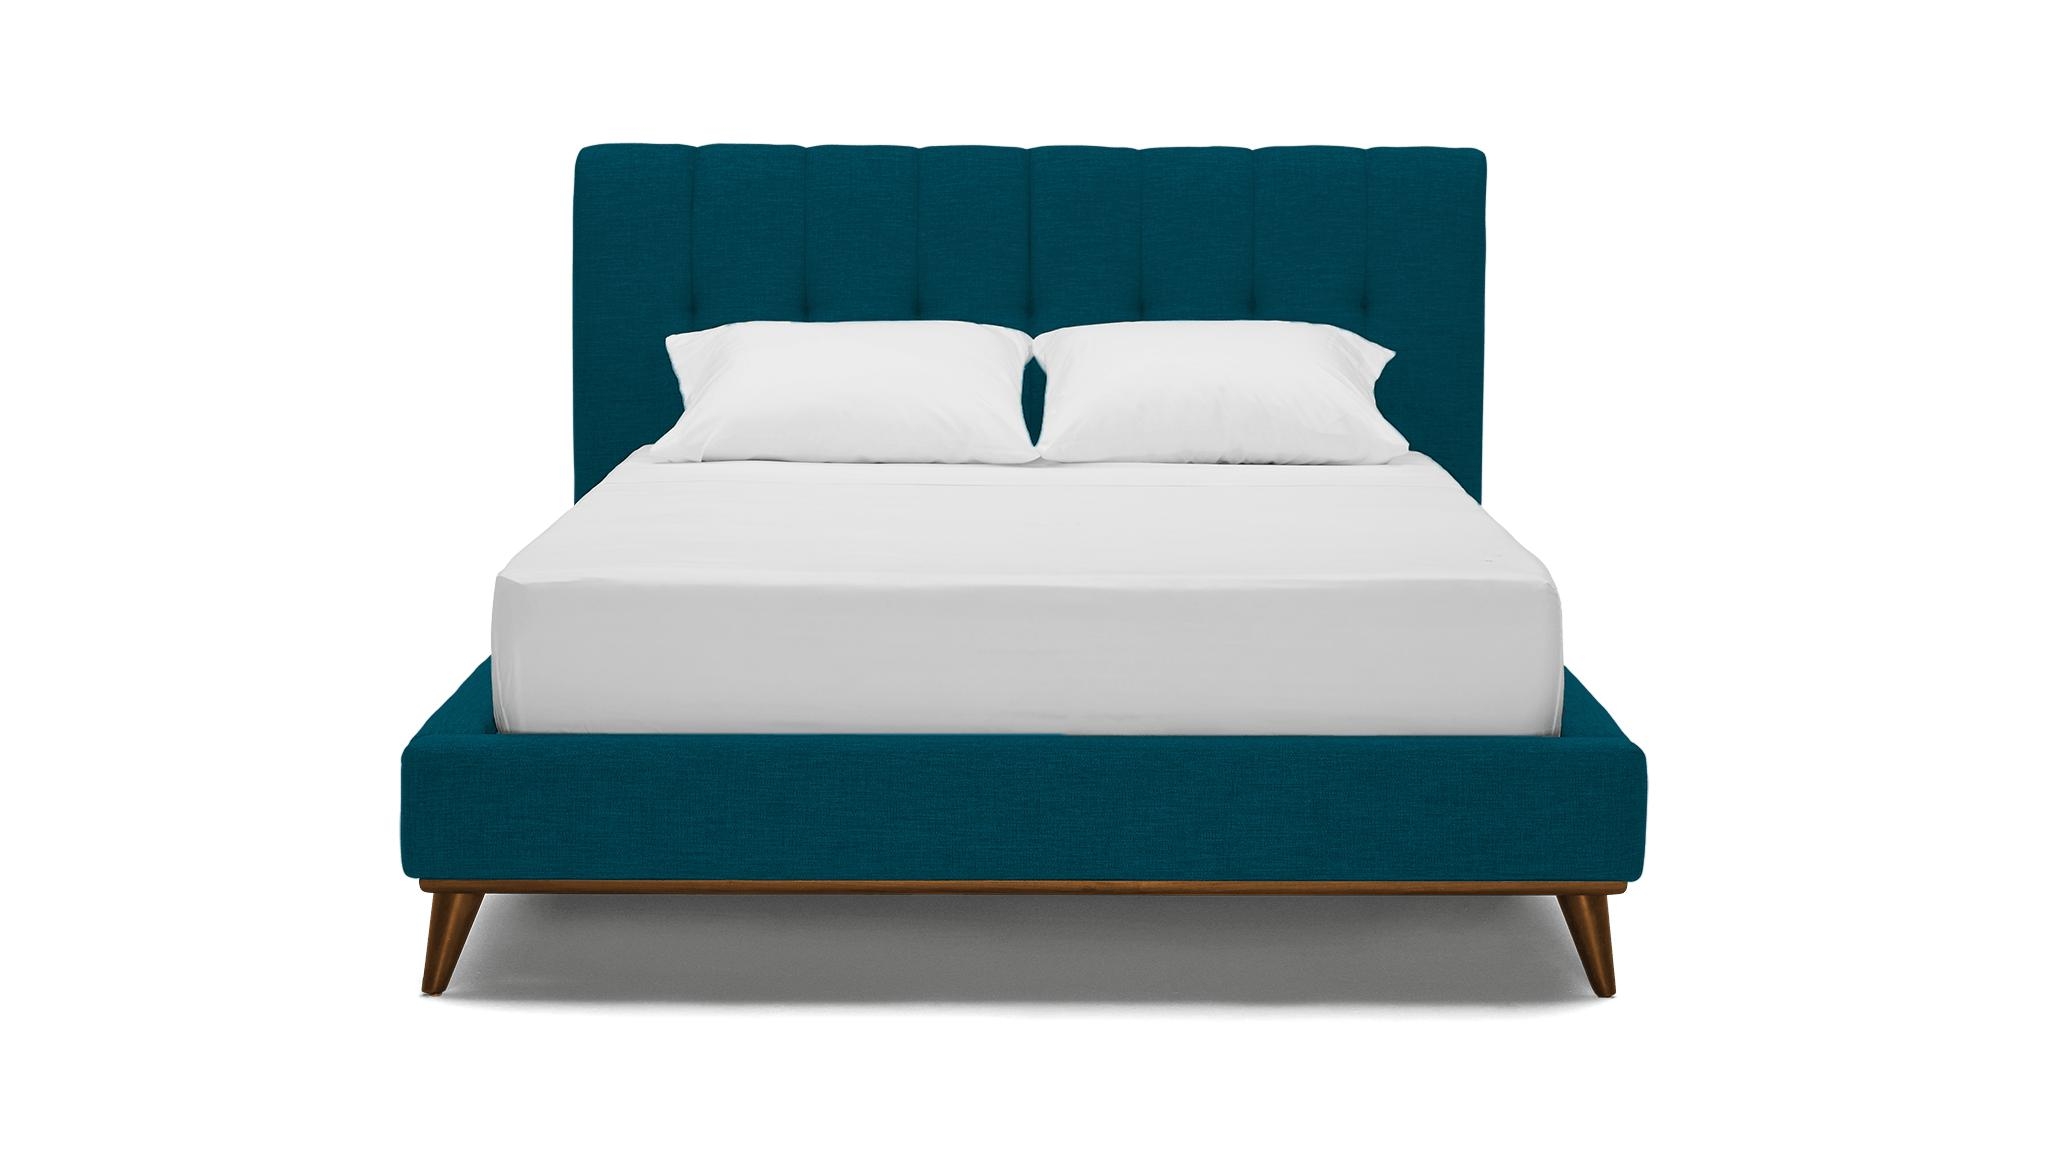 Blue Hughes Mid Century Modern Bed - Key Largo Zenith Teal - Mocha - Queen - Image 0